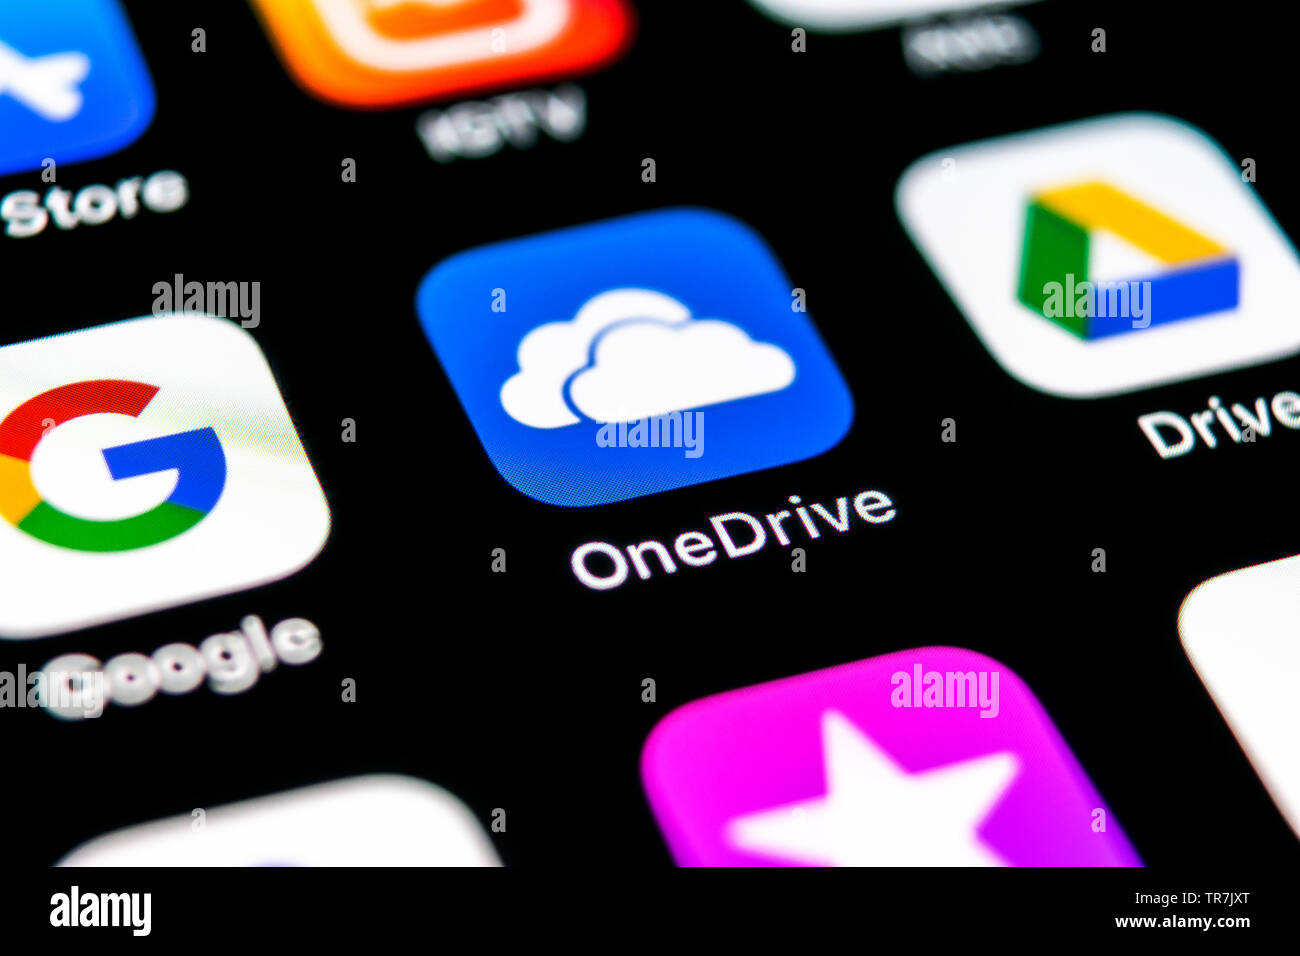 Microsoft OneDrive on the App Store